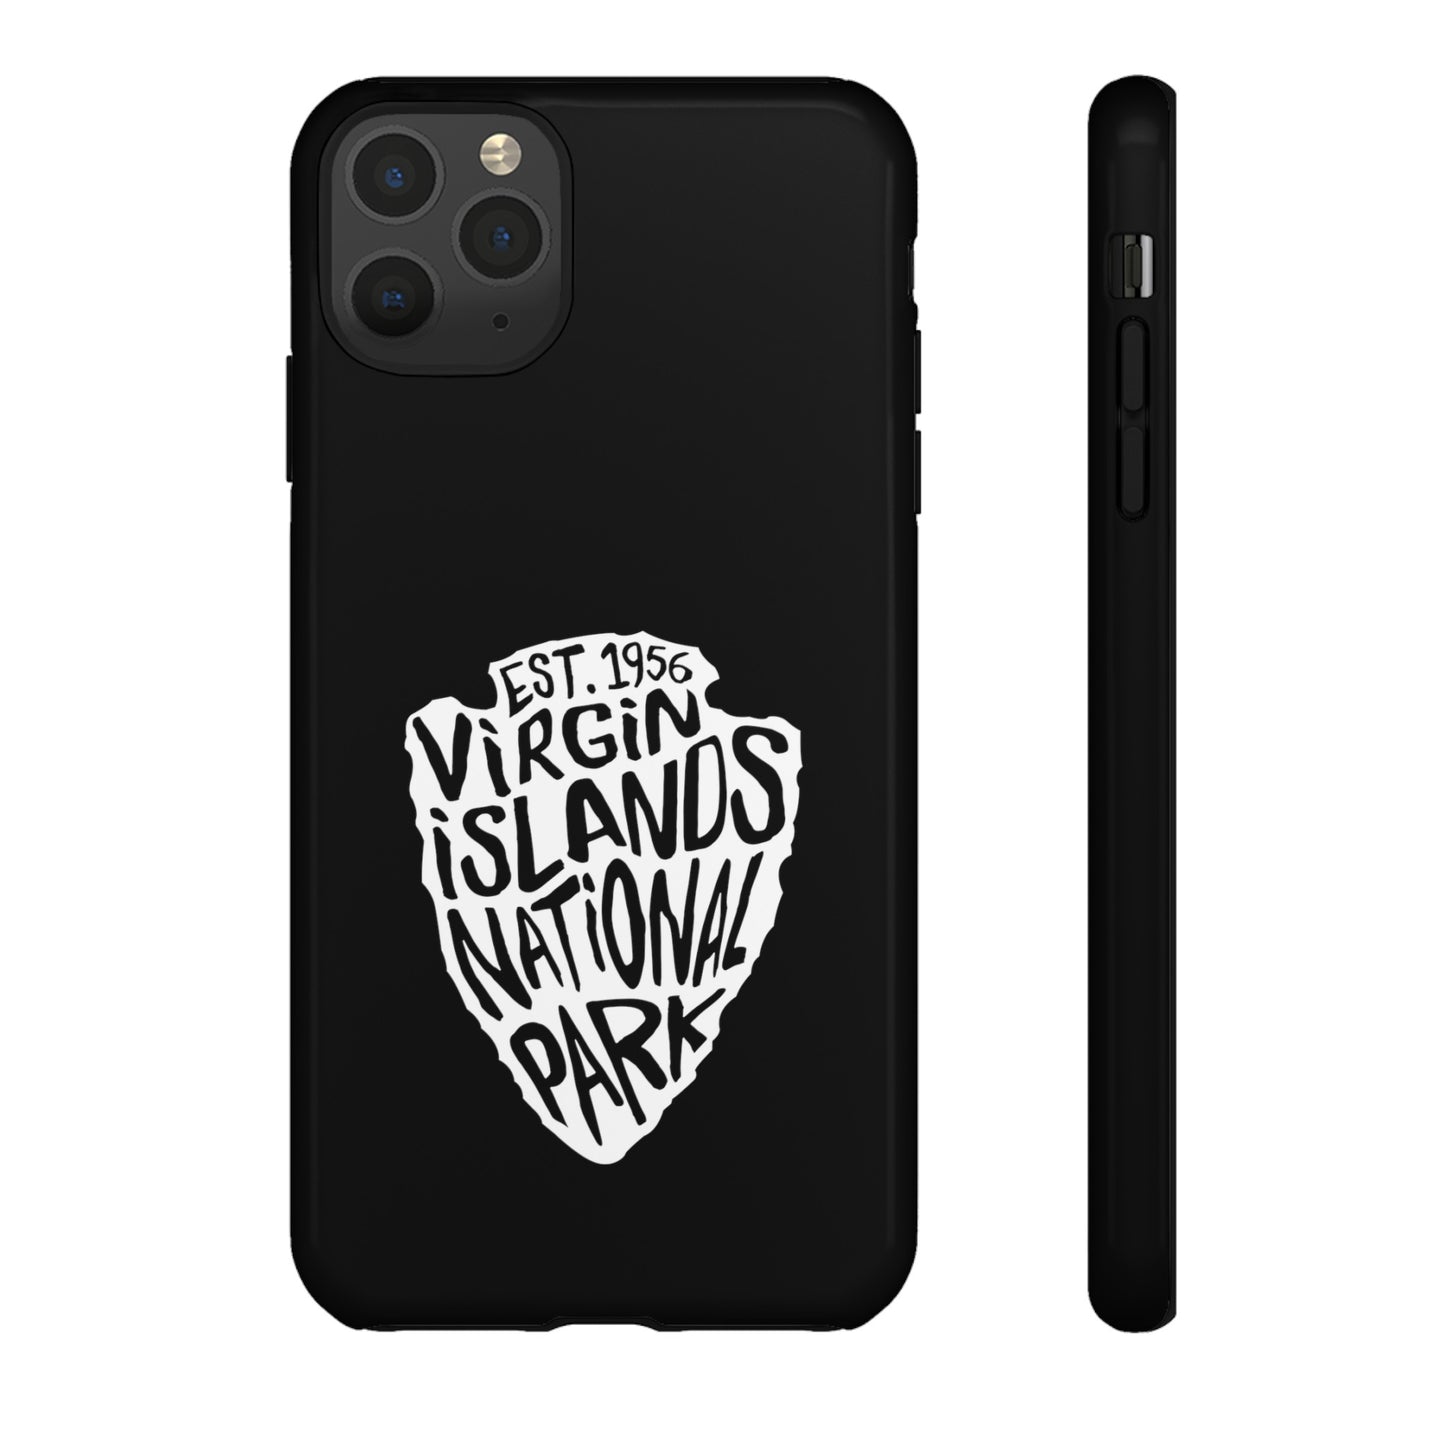 Virgin Islands National Park Phone Case - Arrowhead Design